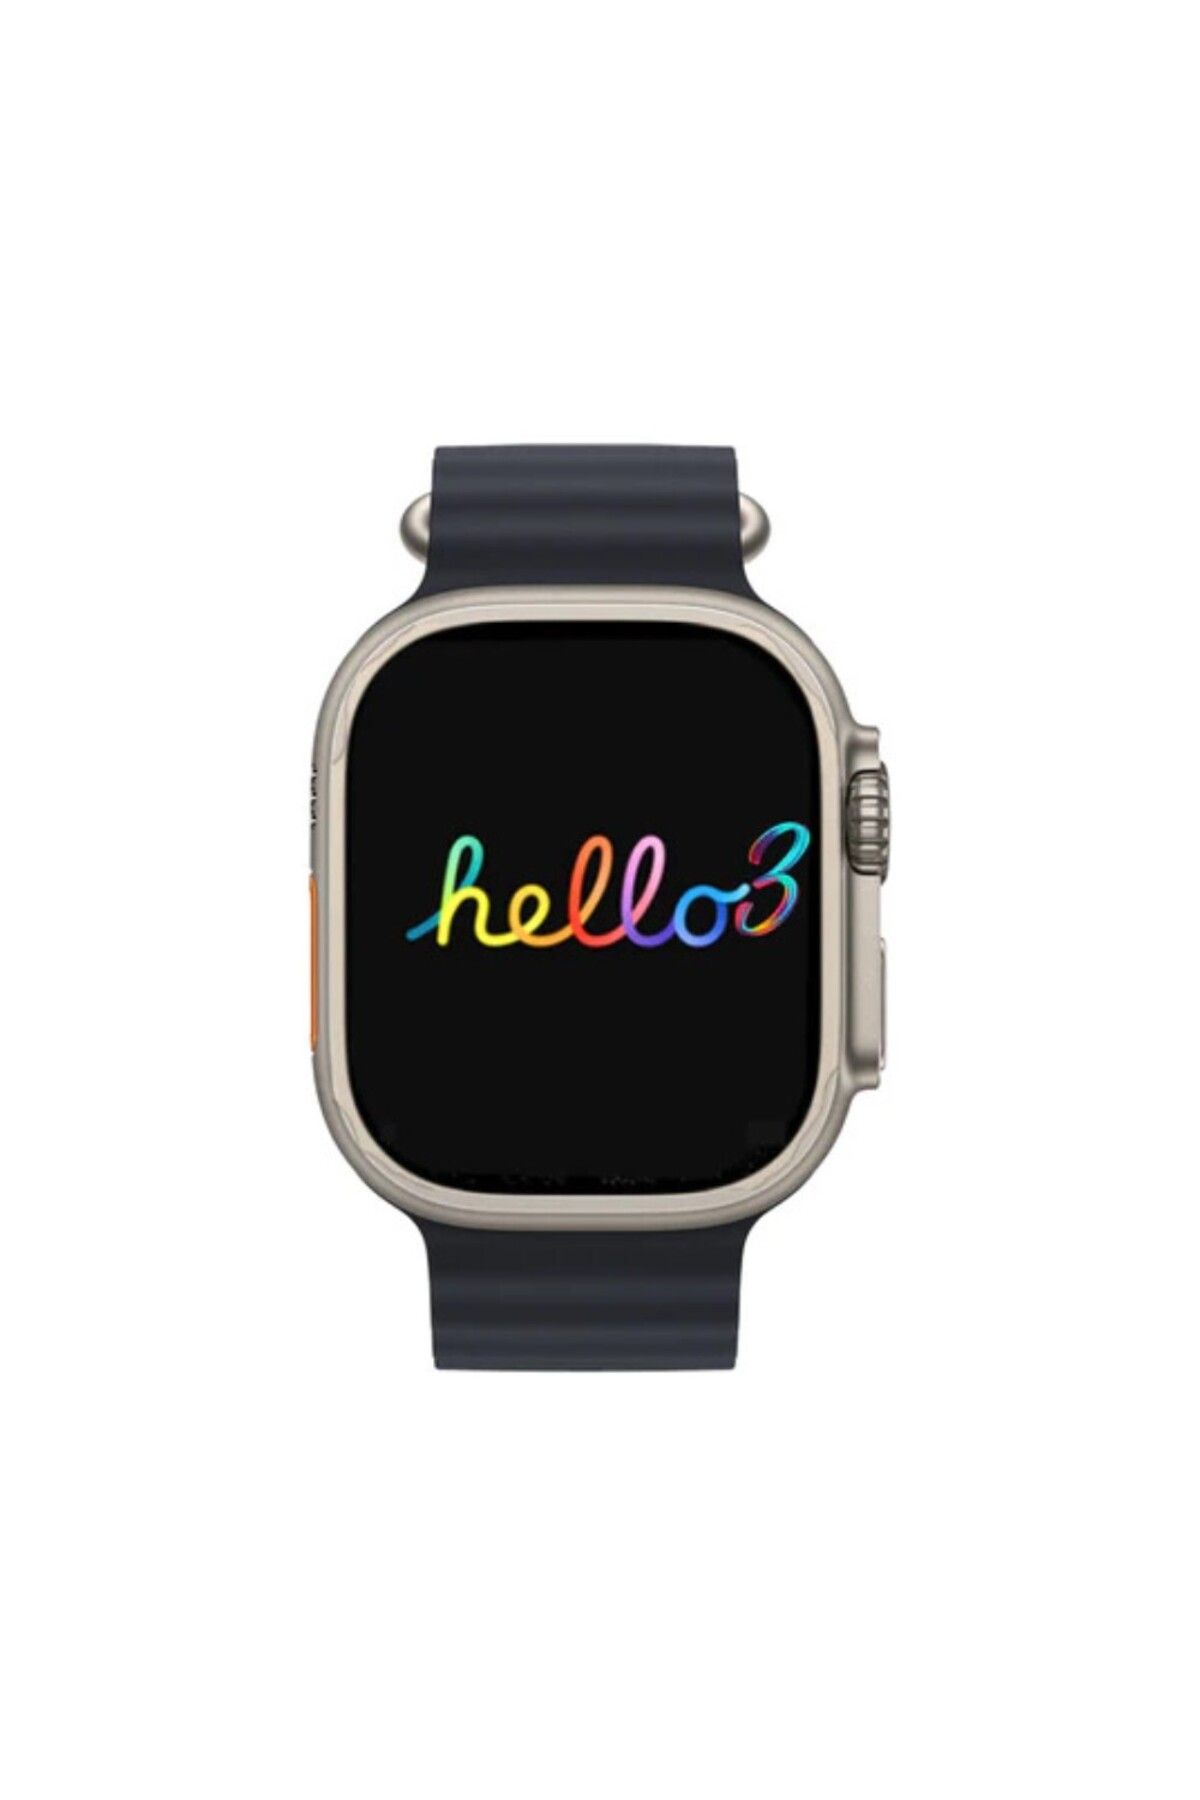 Global Hello 3 Watch Ultra Amoled Ekran Android İos HarmonyOs Uyumlu Akıllı Saat Siyah WNE0897